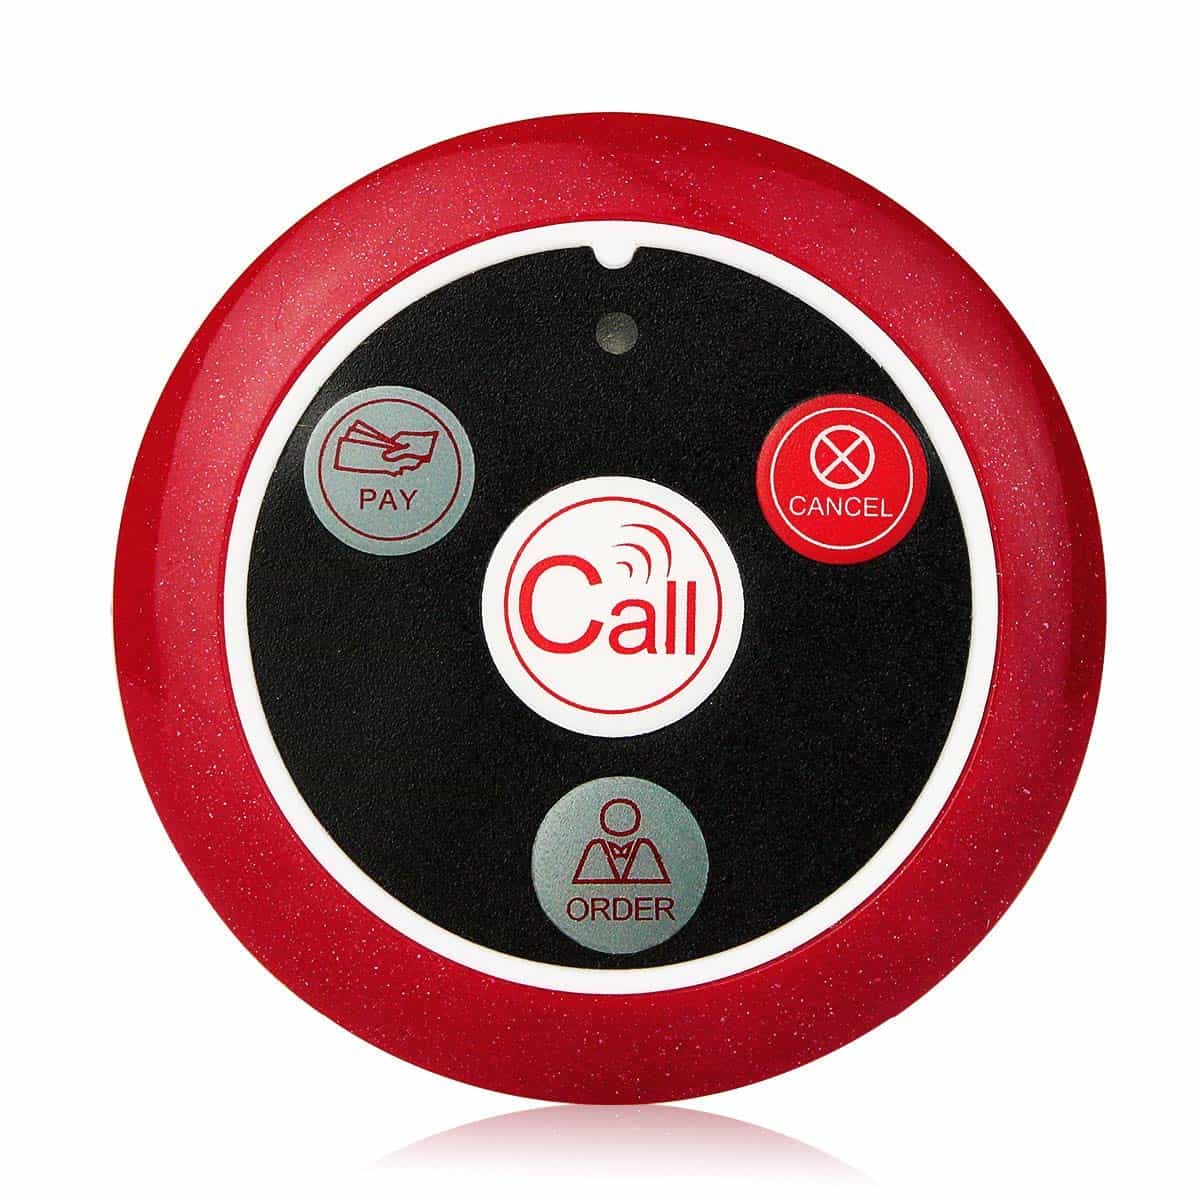 Details about   Retekess T128 Wireless Caregiver Pager,Long Distance Nursing Calling,Restaura... 